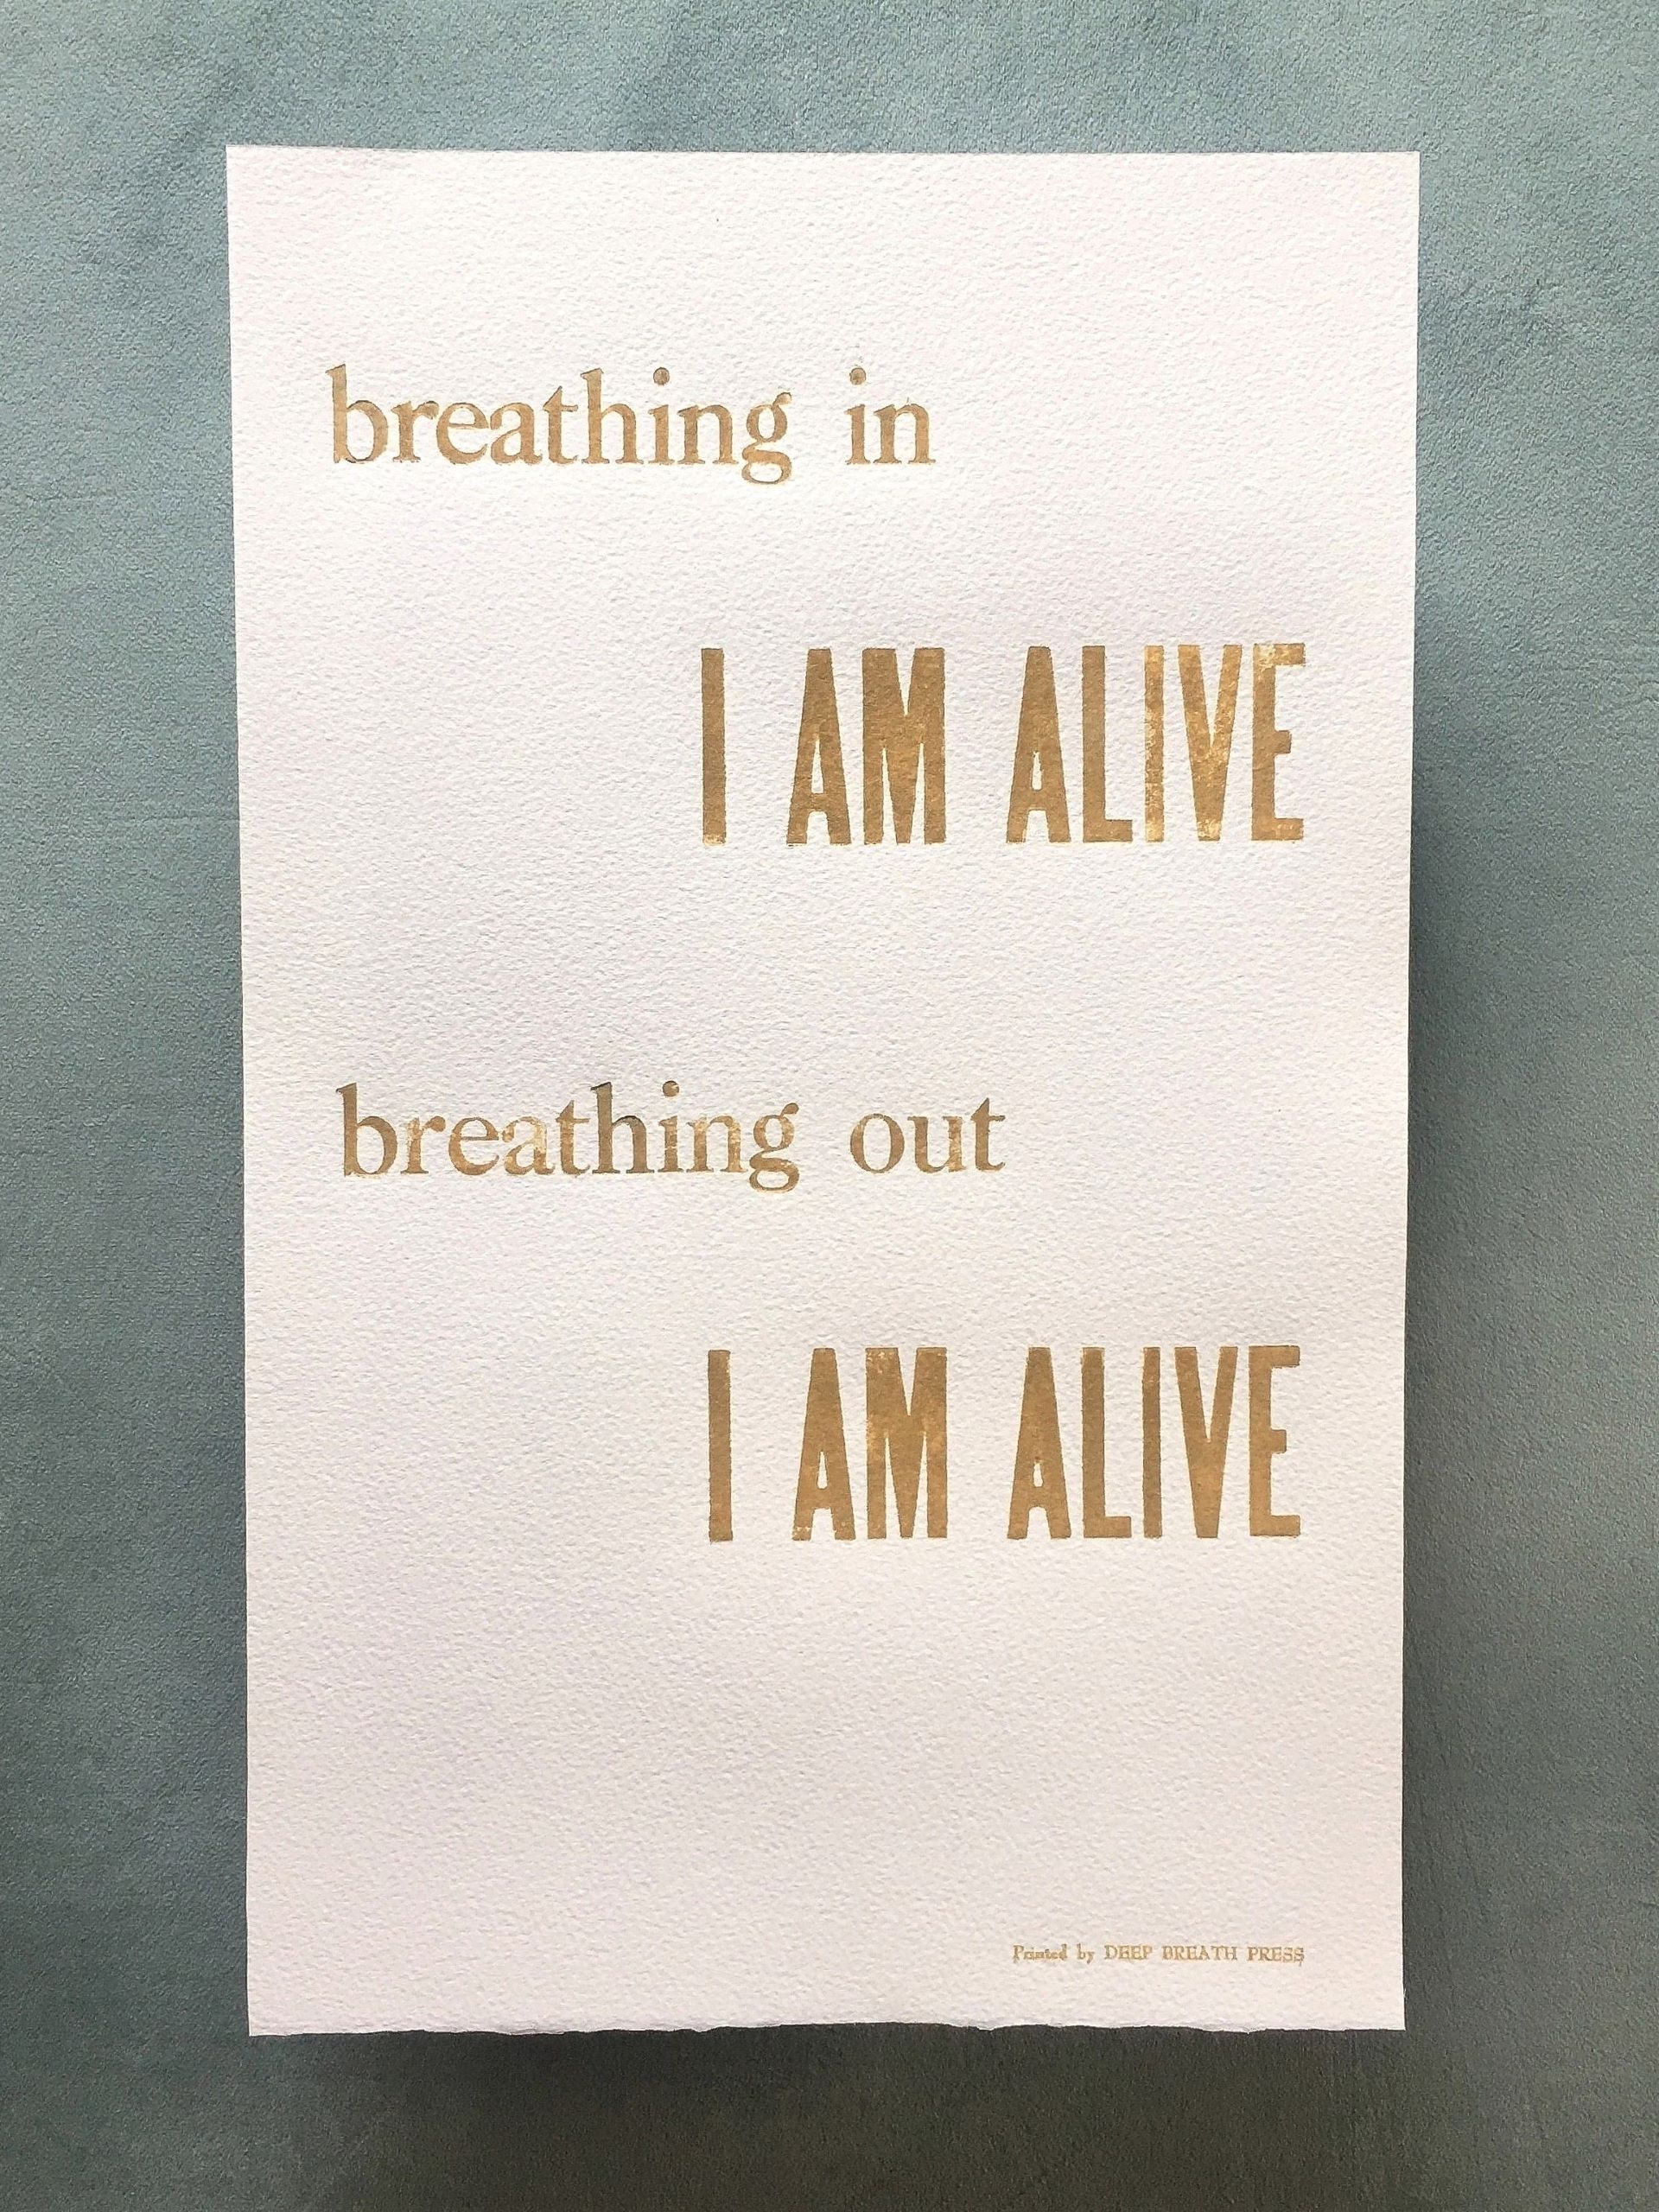 I am alive print